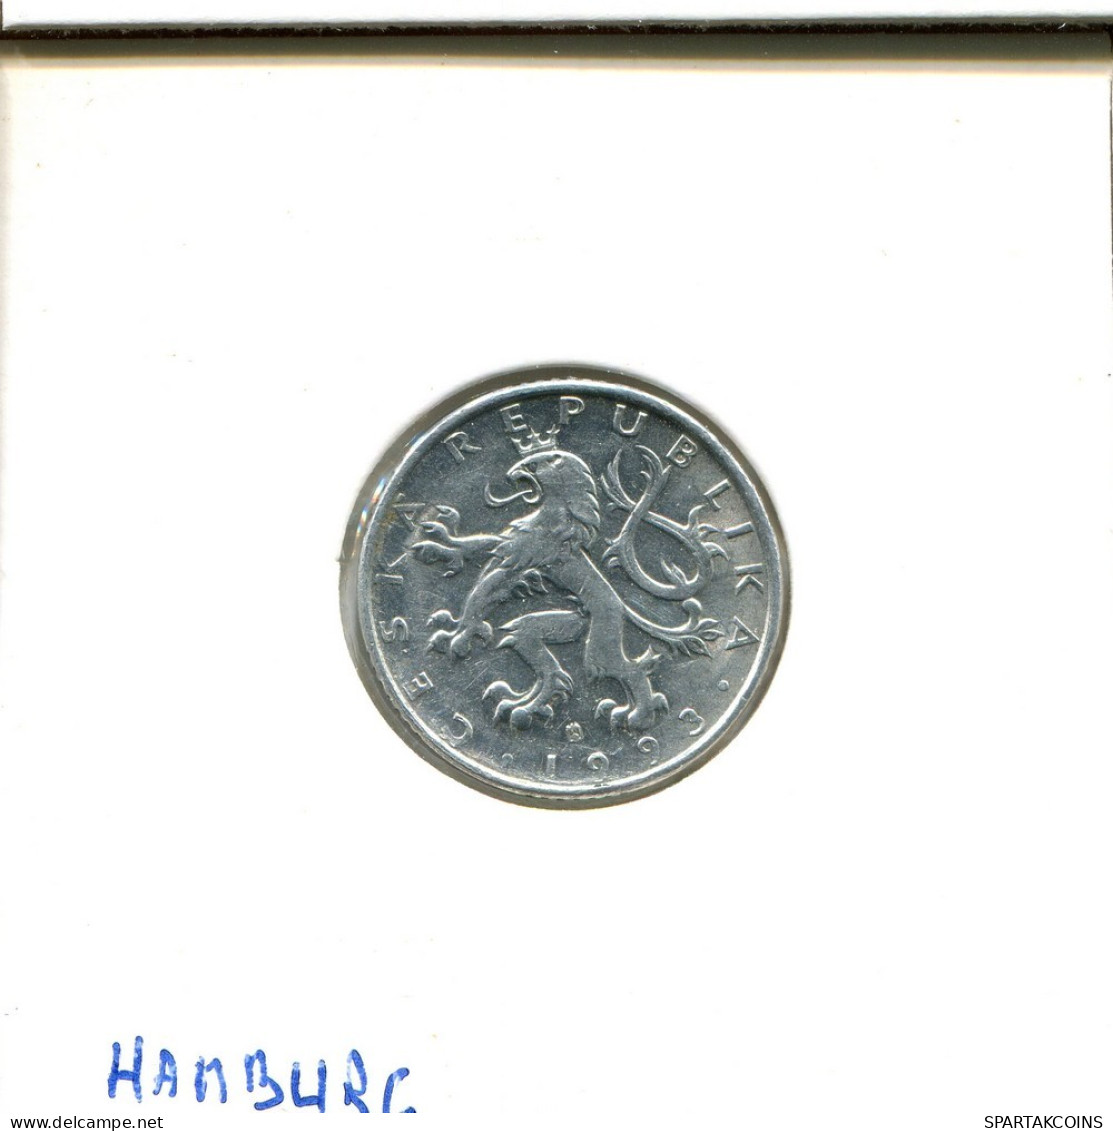 50 HALERU 1993 REPÚBLICA CHECA CZECH REPUBLIC Moneda #AT009.E.A - Tchéquie